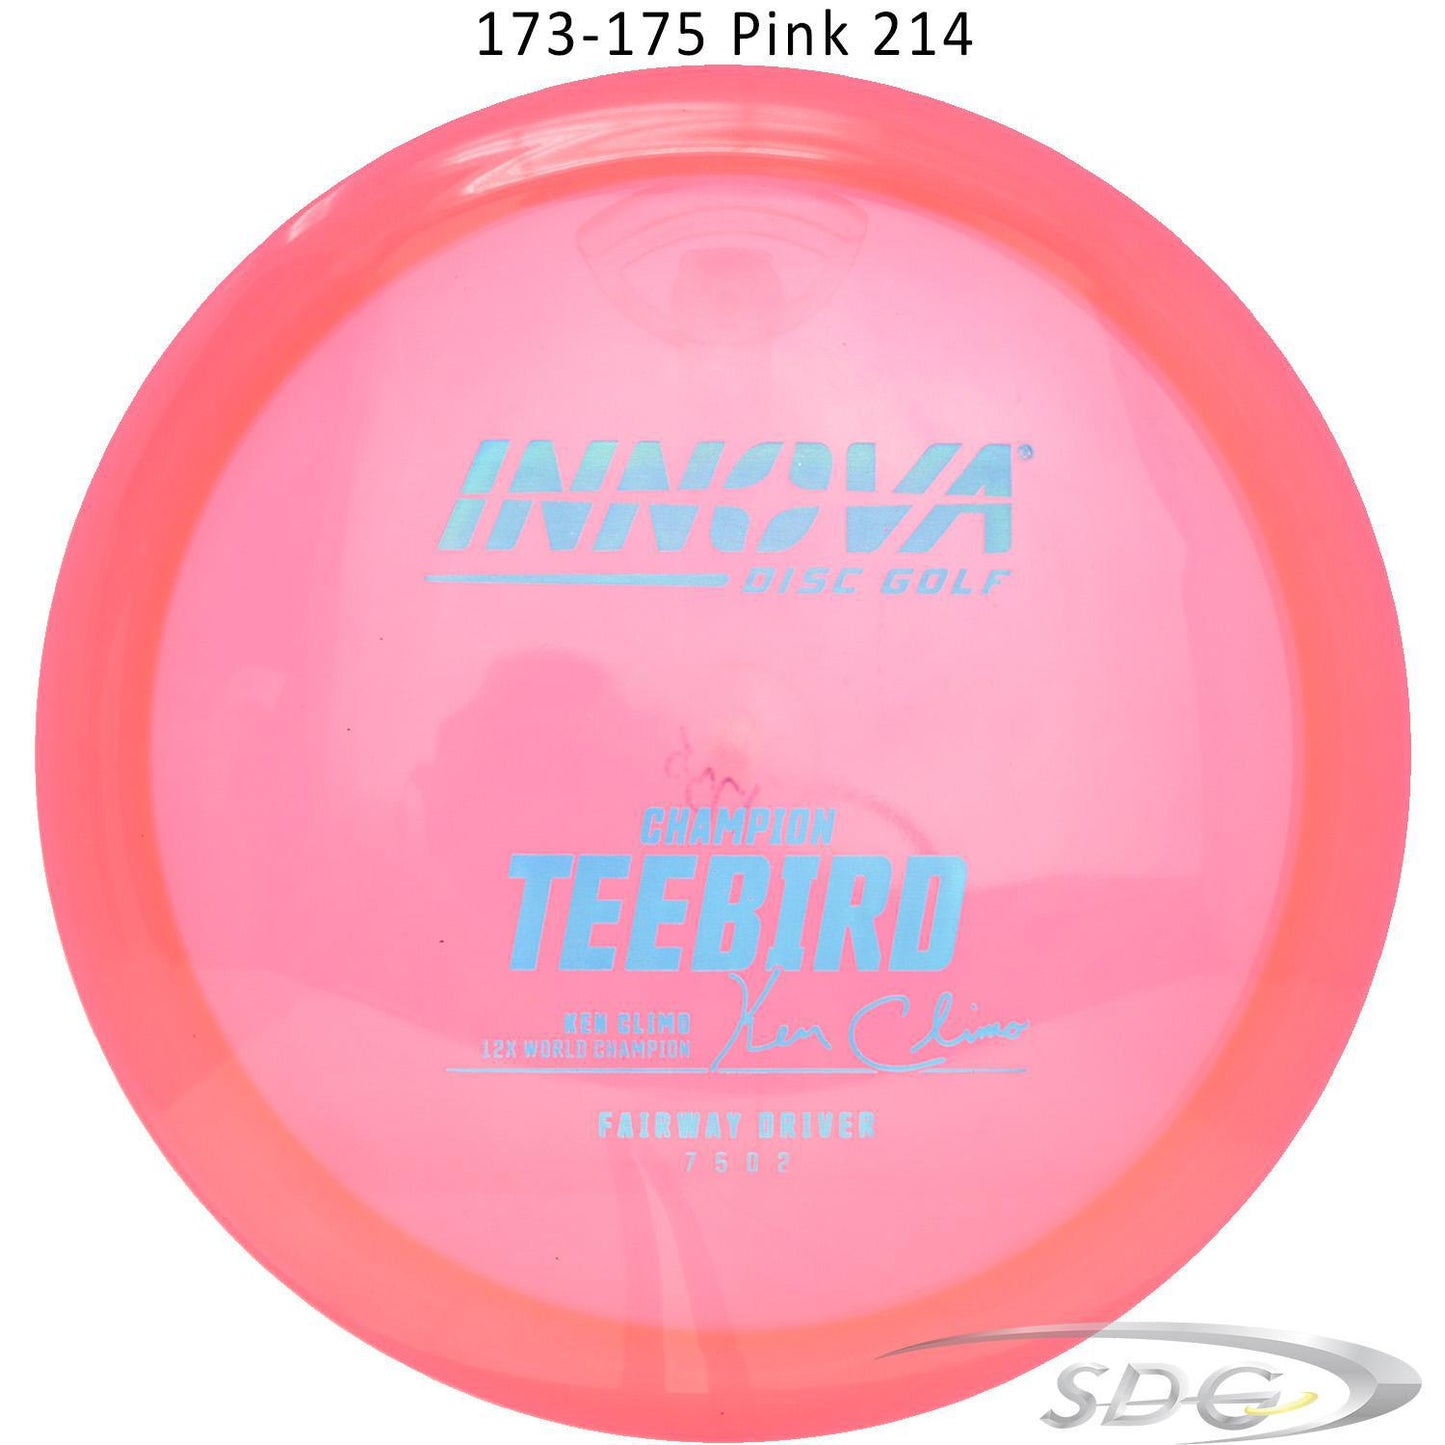 innova-champion-teebird-disc-golf-fairway-driver 173-175 Pink 214 